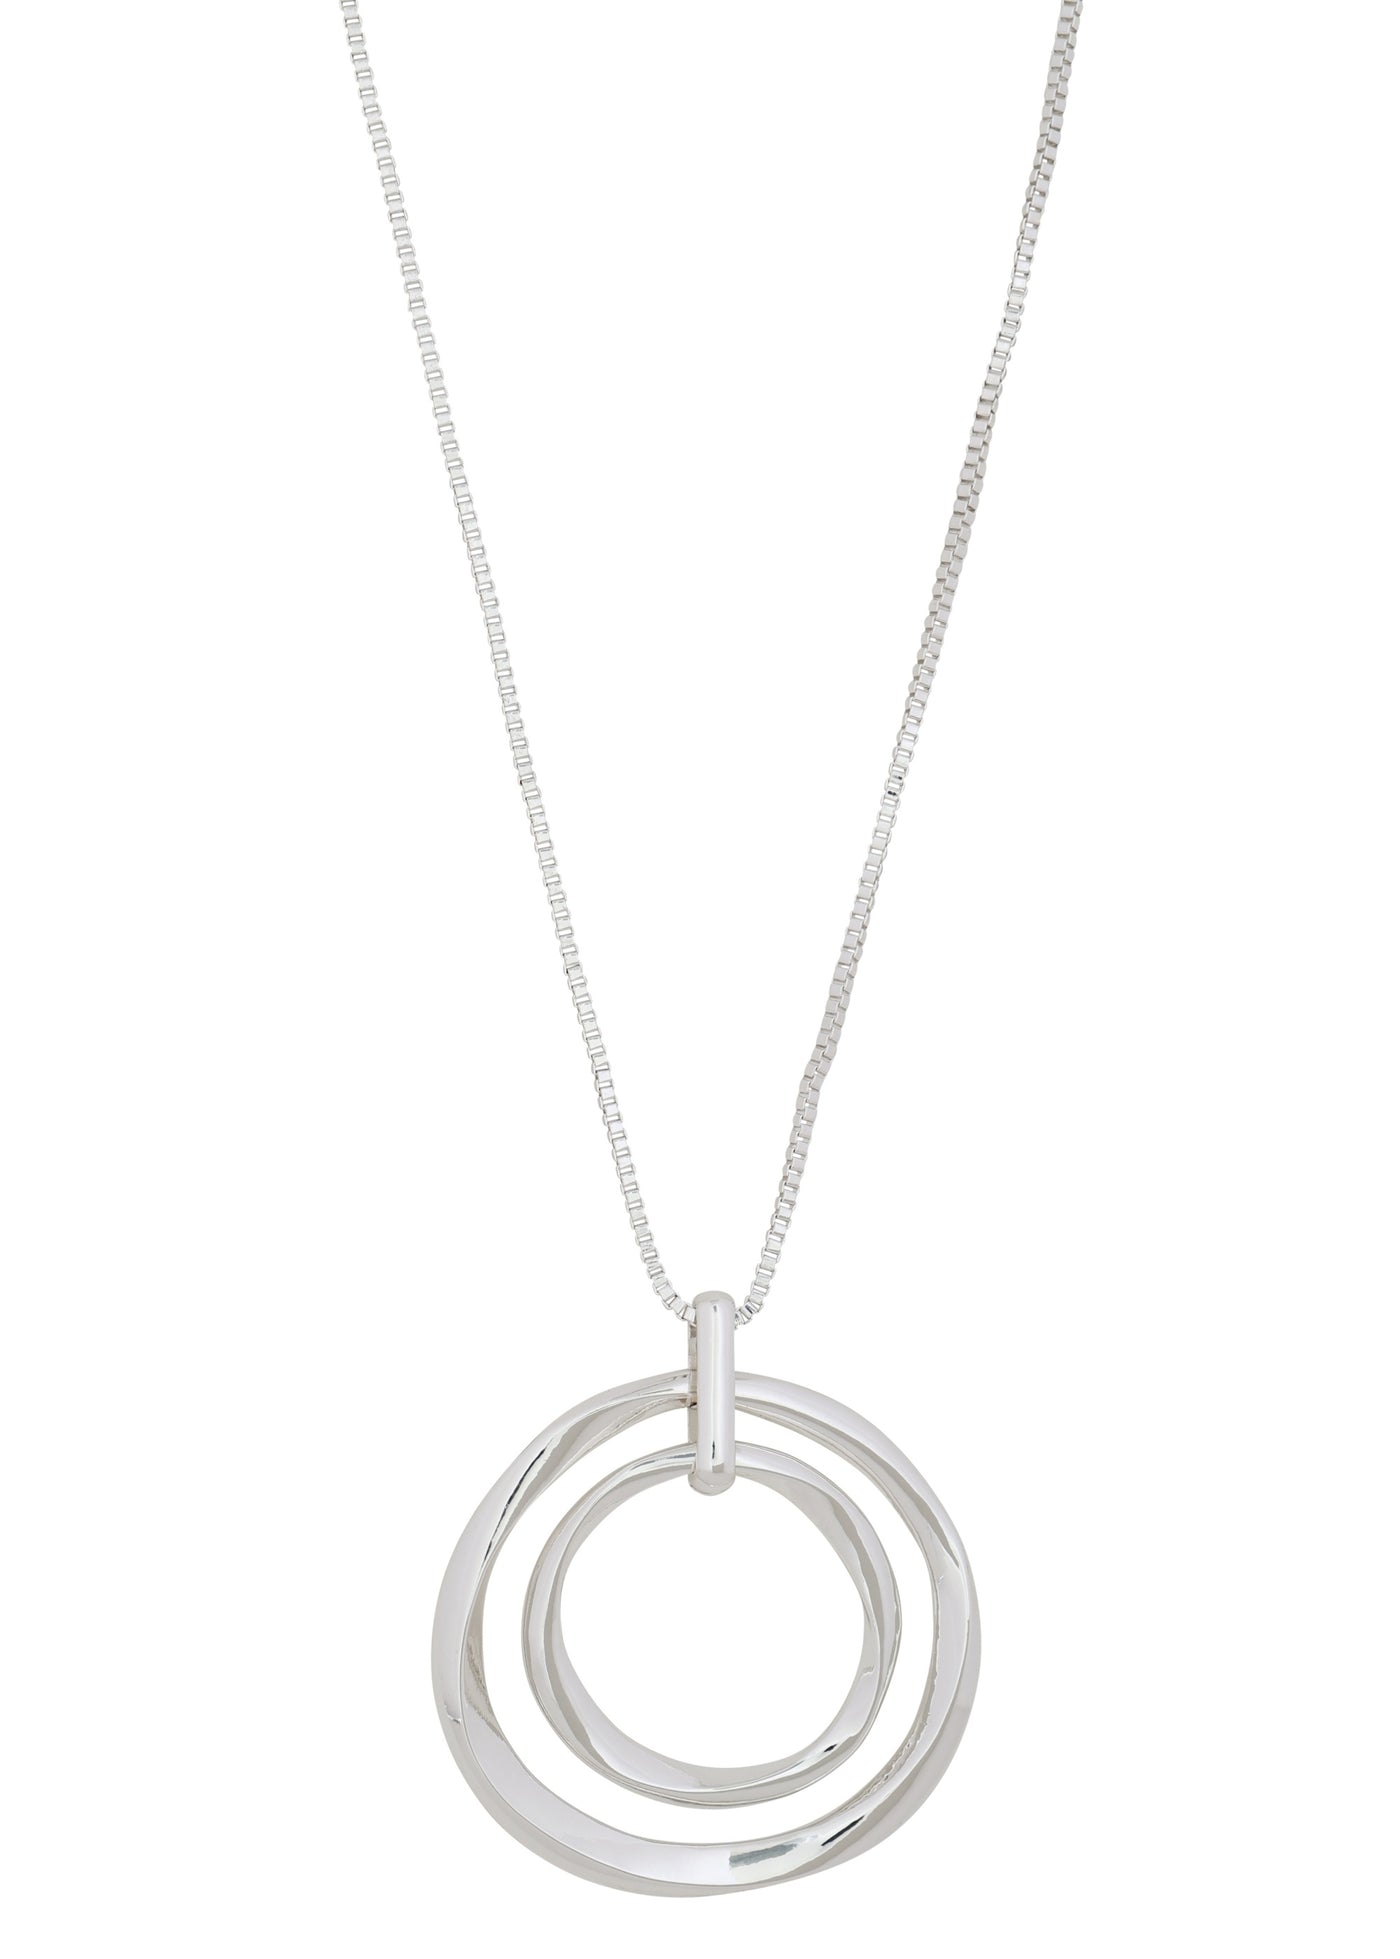 Merx - Double Ring Pendant Necklace